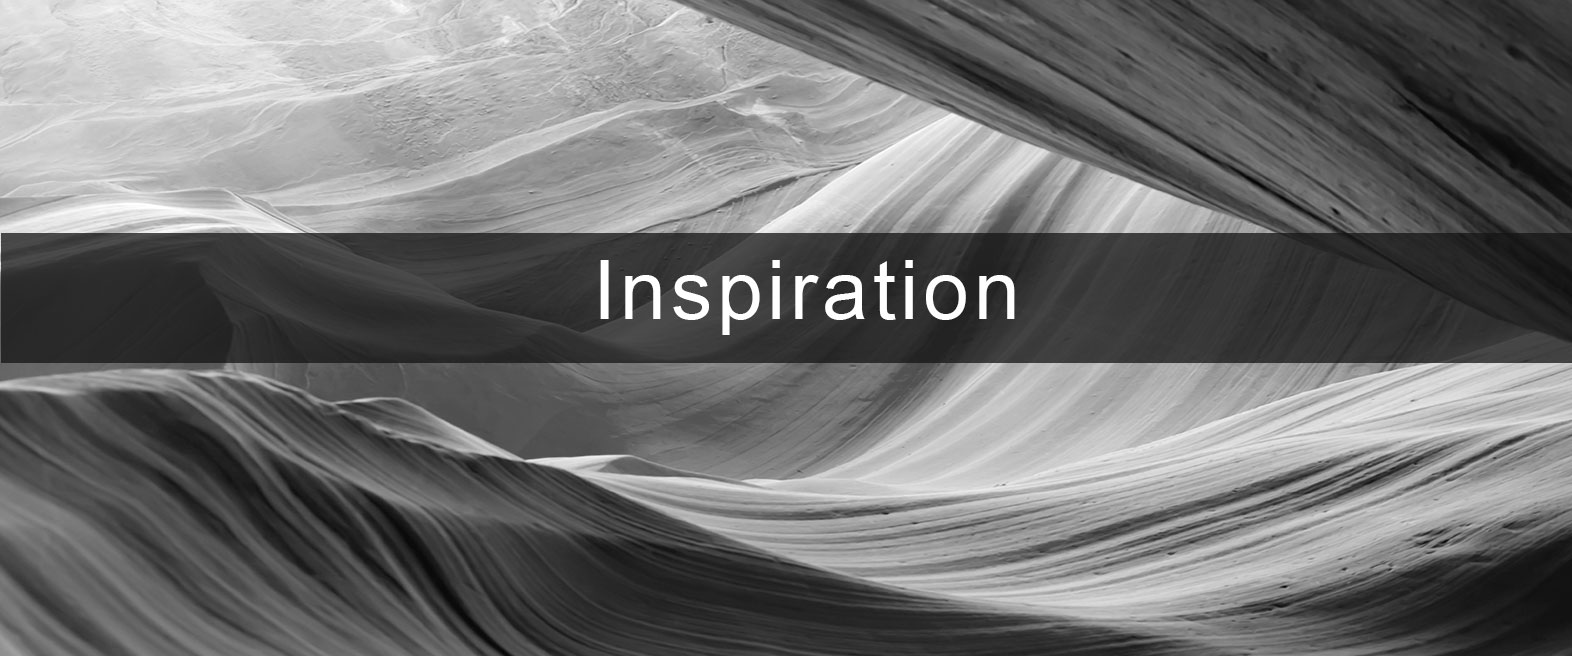 banner_inspiration